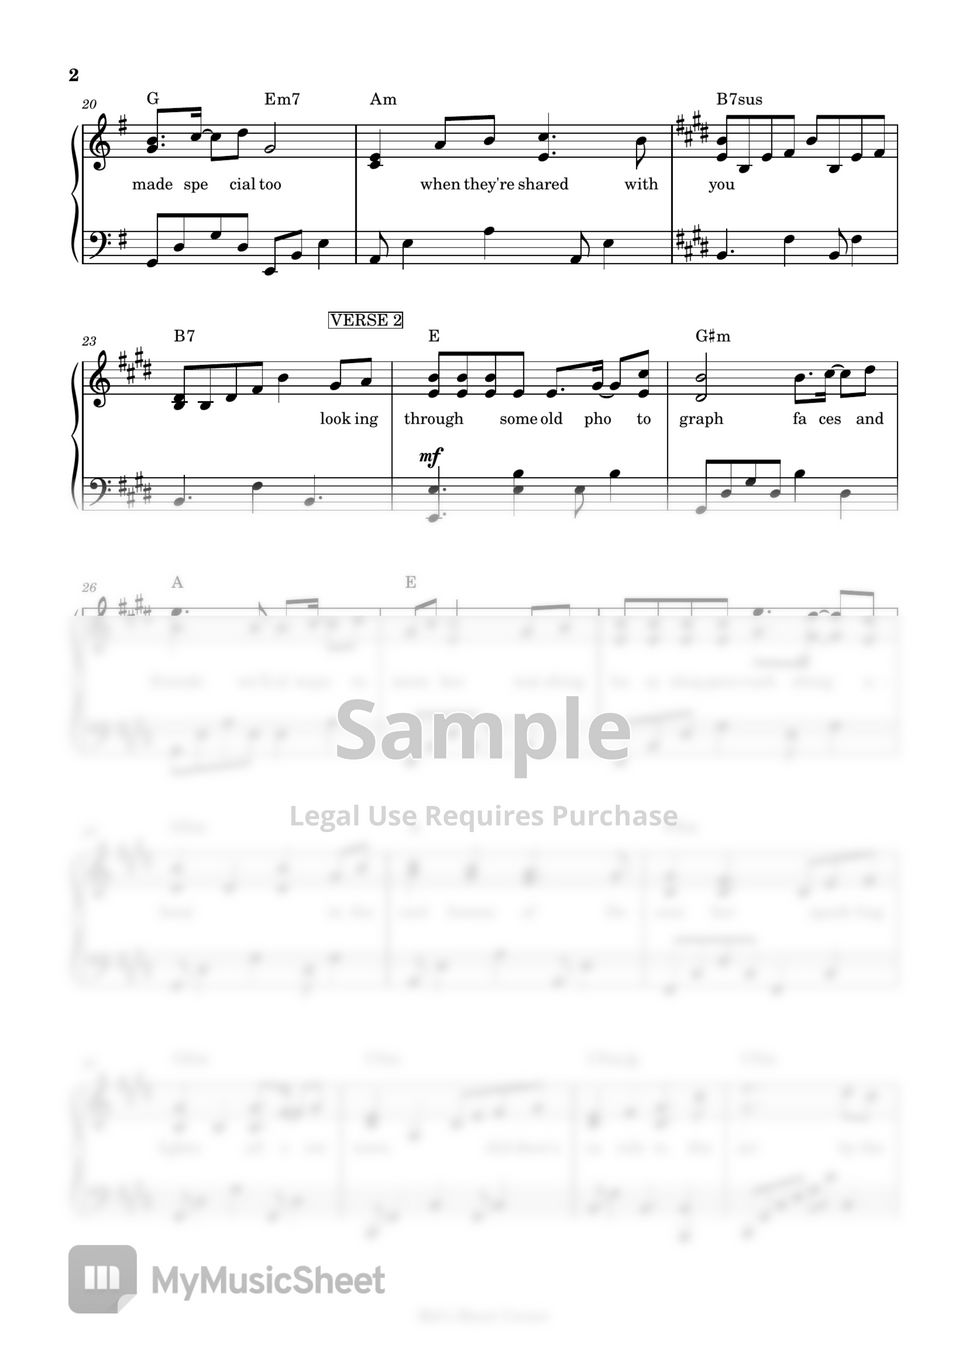 Jose Mari Chan - A Perfect Christmas (piano sheet music) by Mel's Music Corner